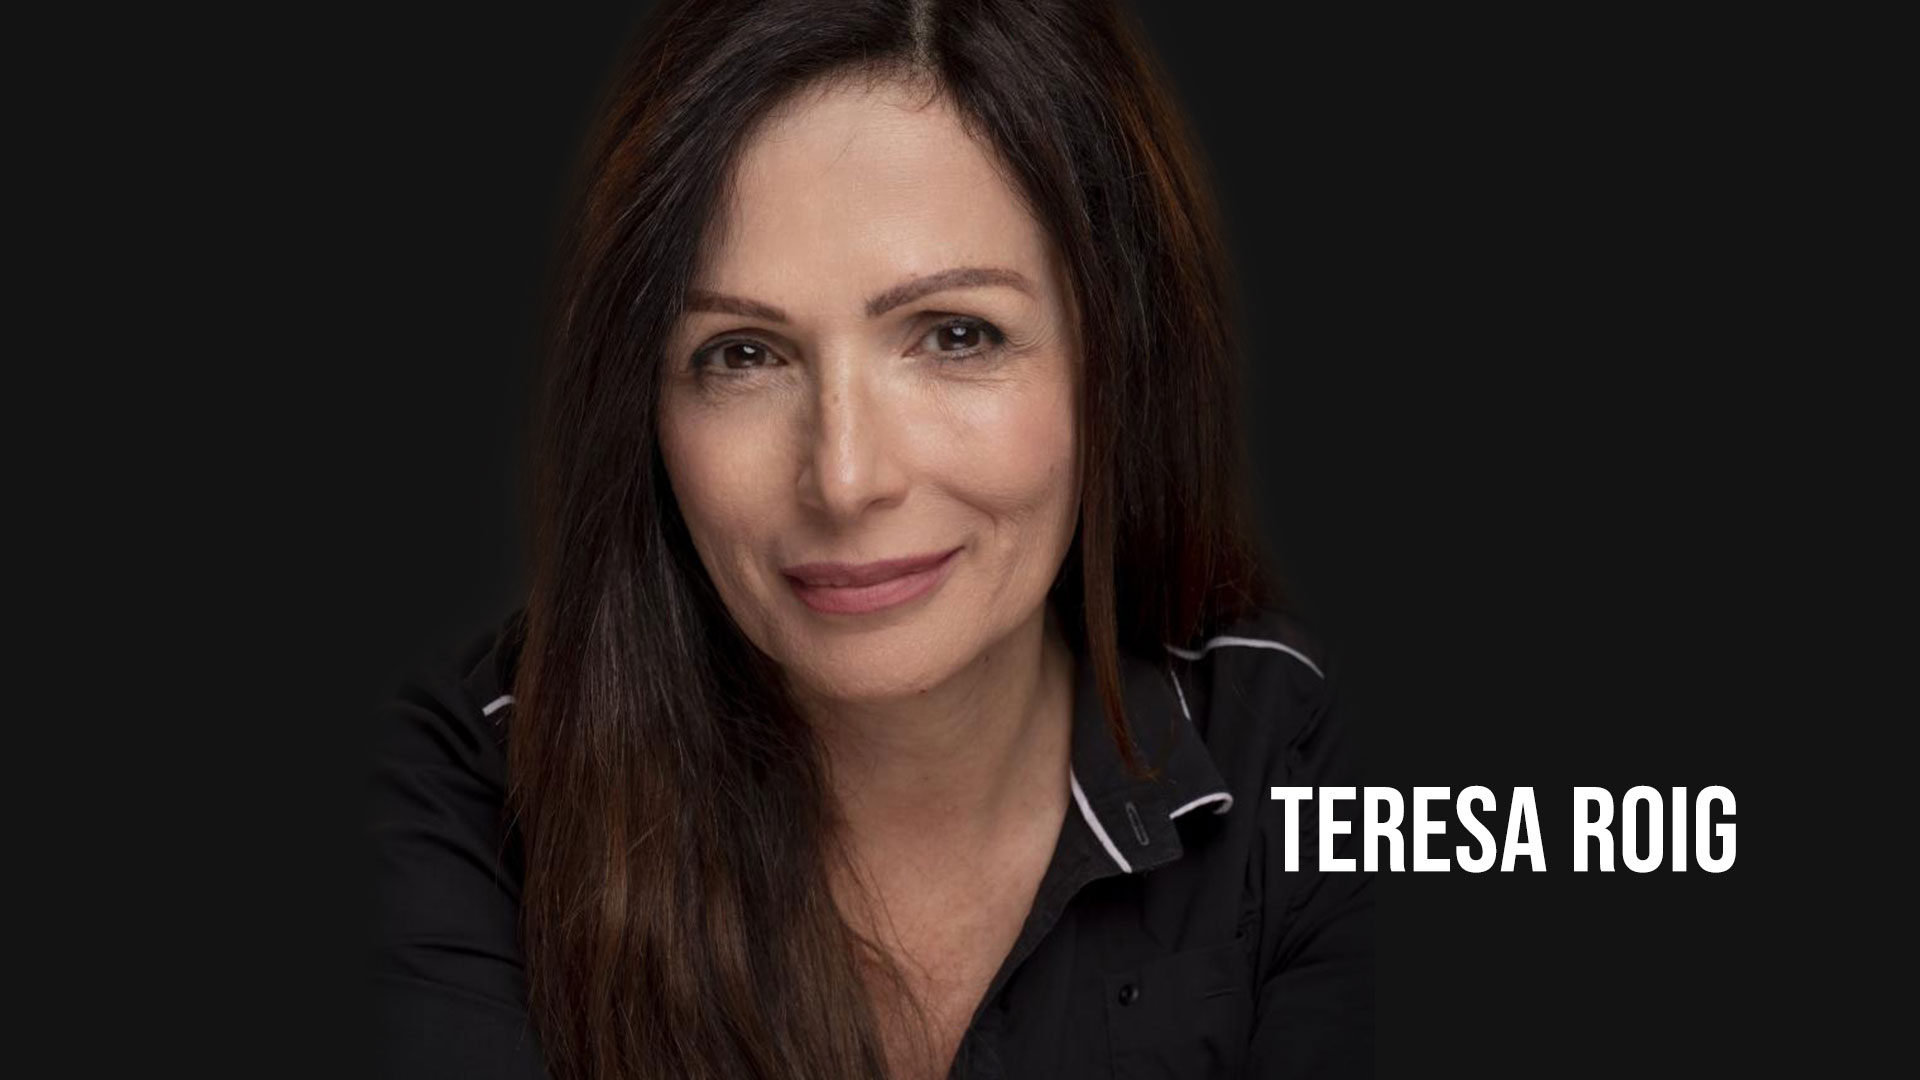 Teresa Roig - Videobook Actriz